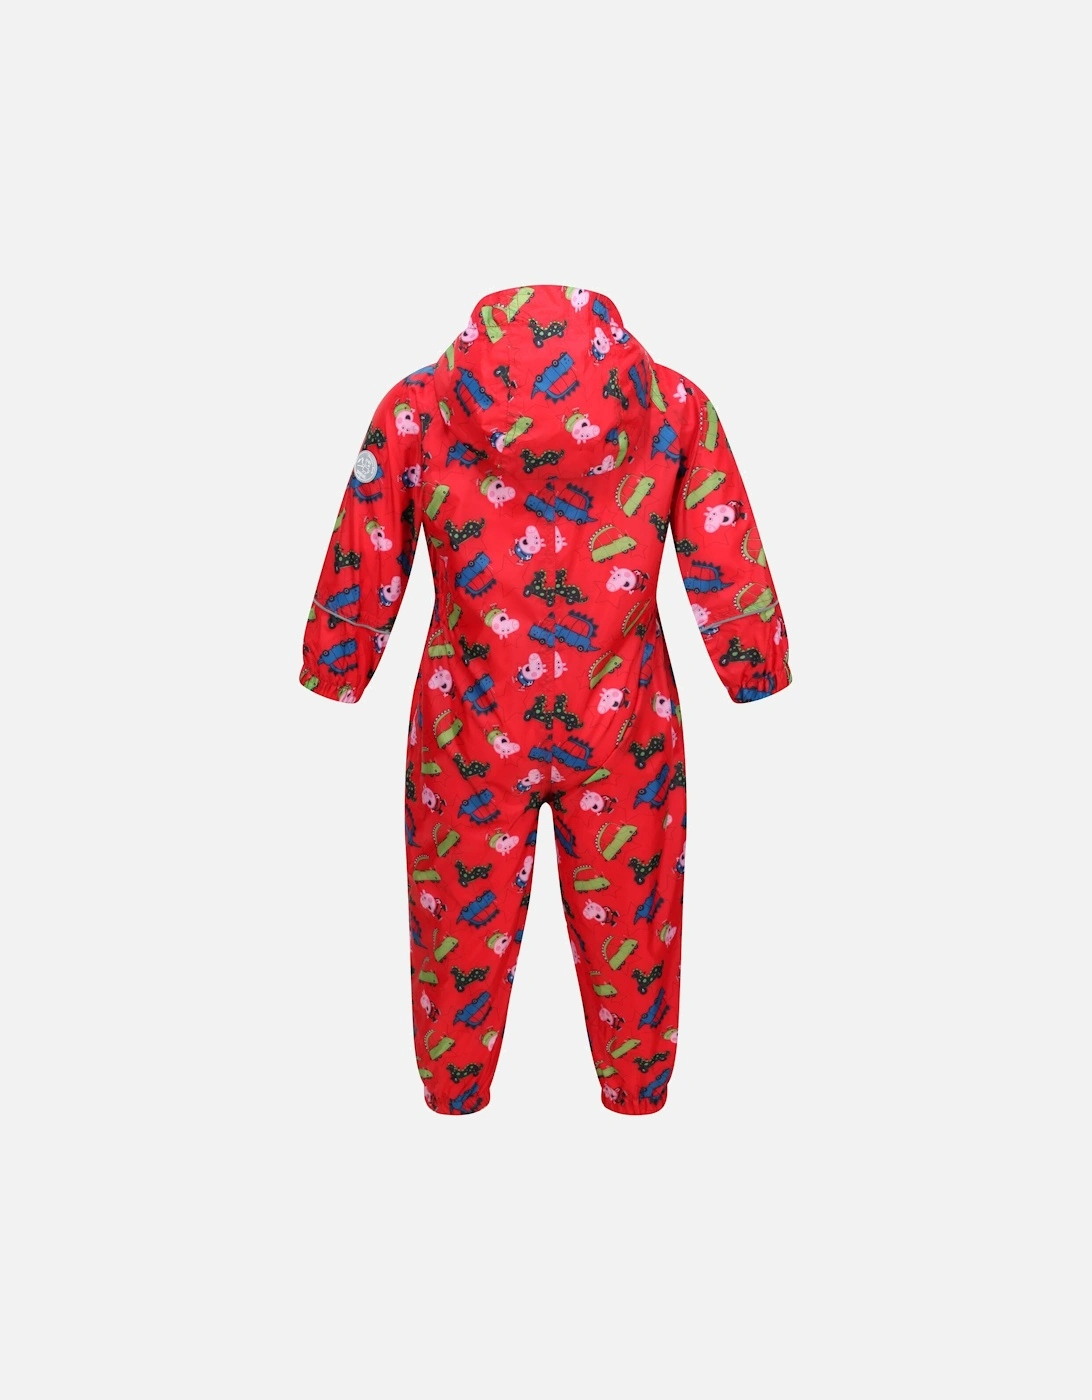 Childrens/Kids Pobble Peppa Pig Dinosaur Waterproof Puddle Suit